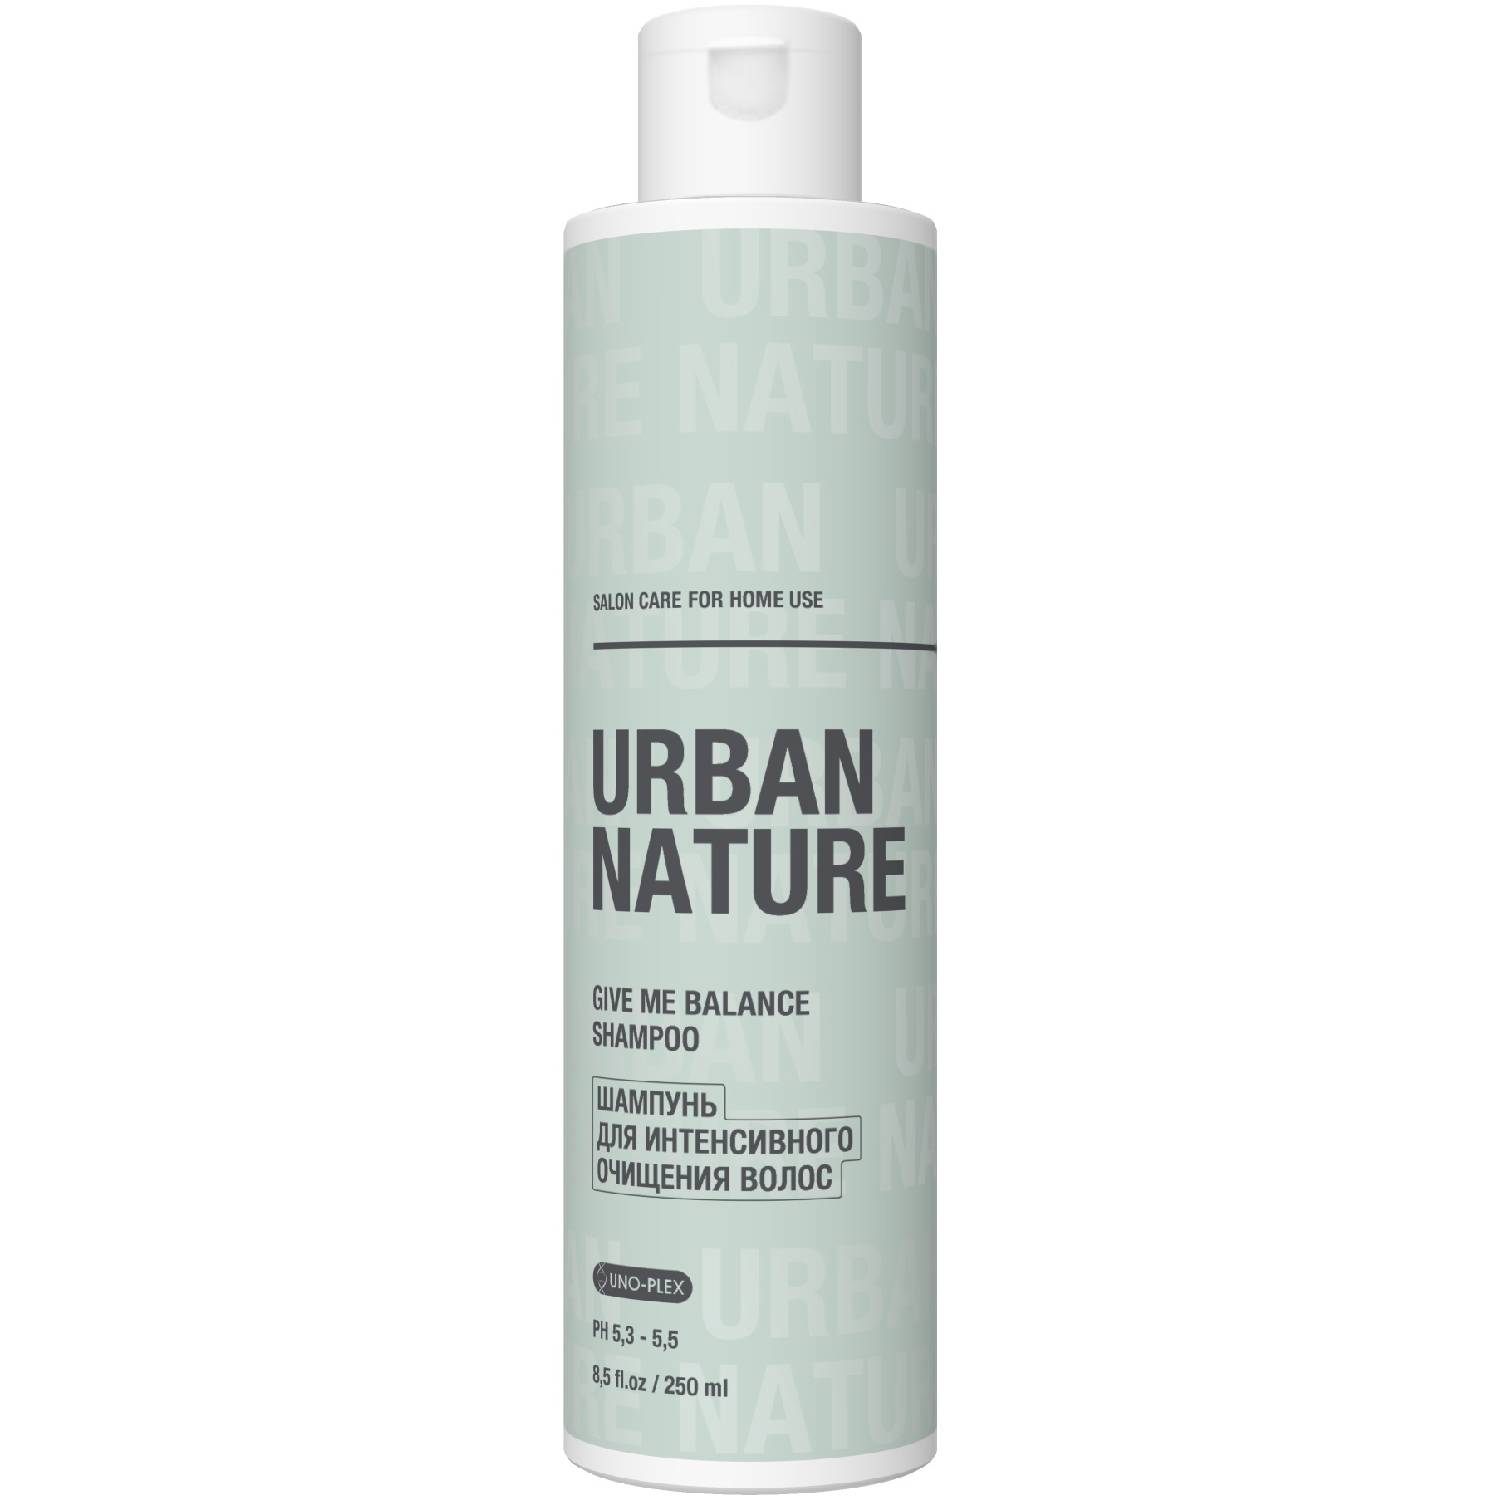 Urban Nature Шампунь для интенсивного очищения волос, 250 мл (Urban Nature, Give Me Balance)